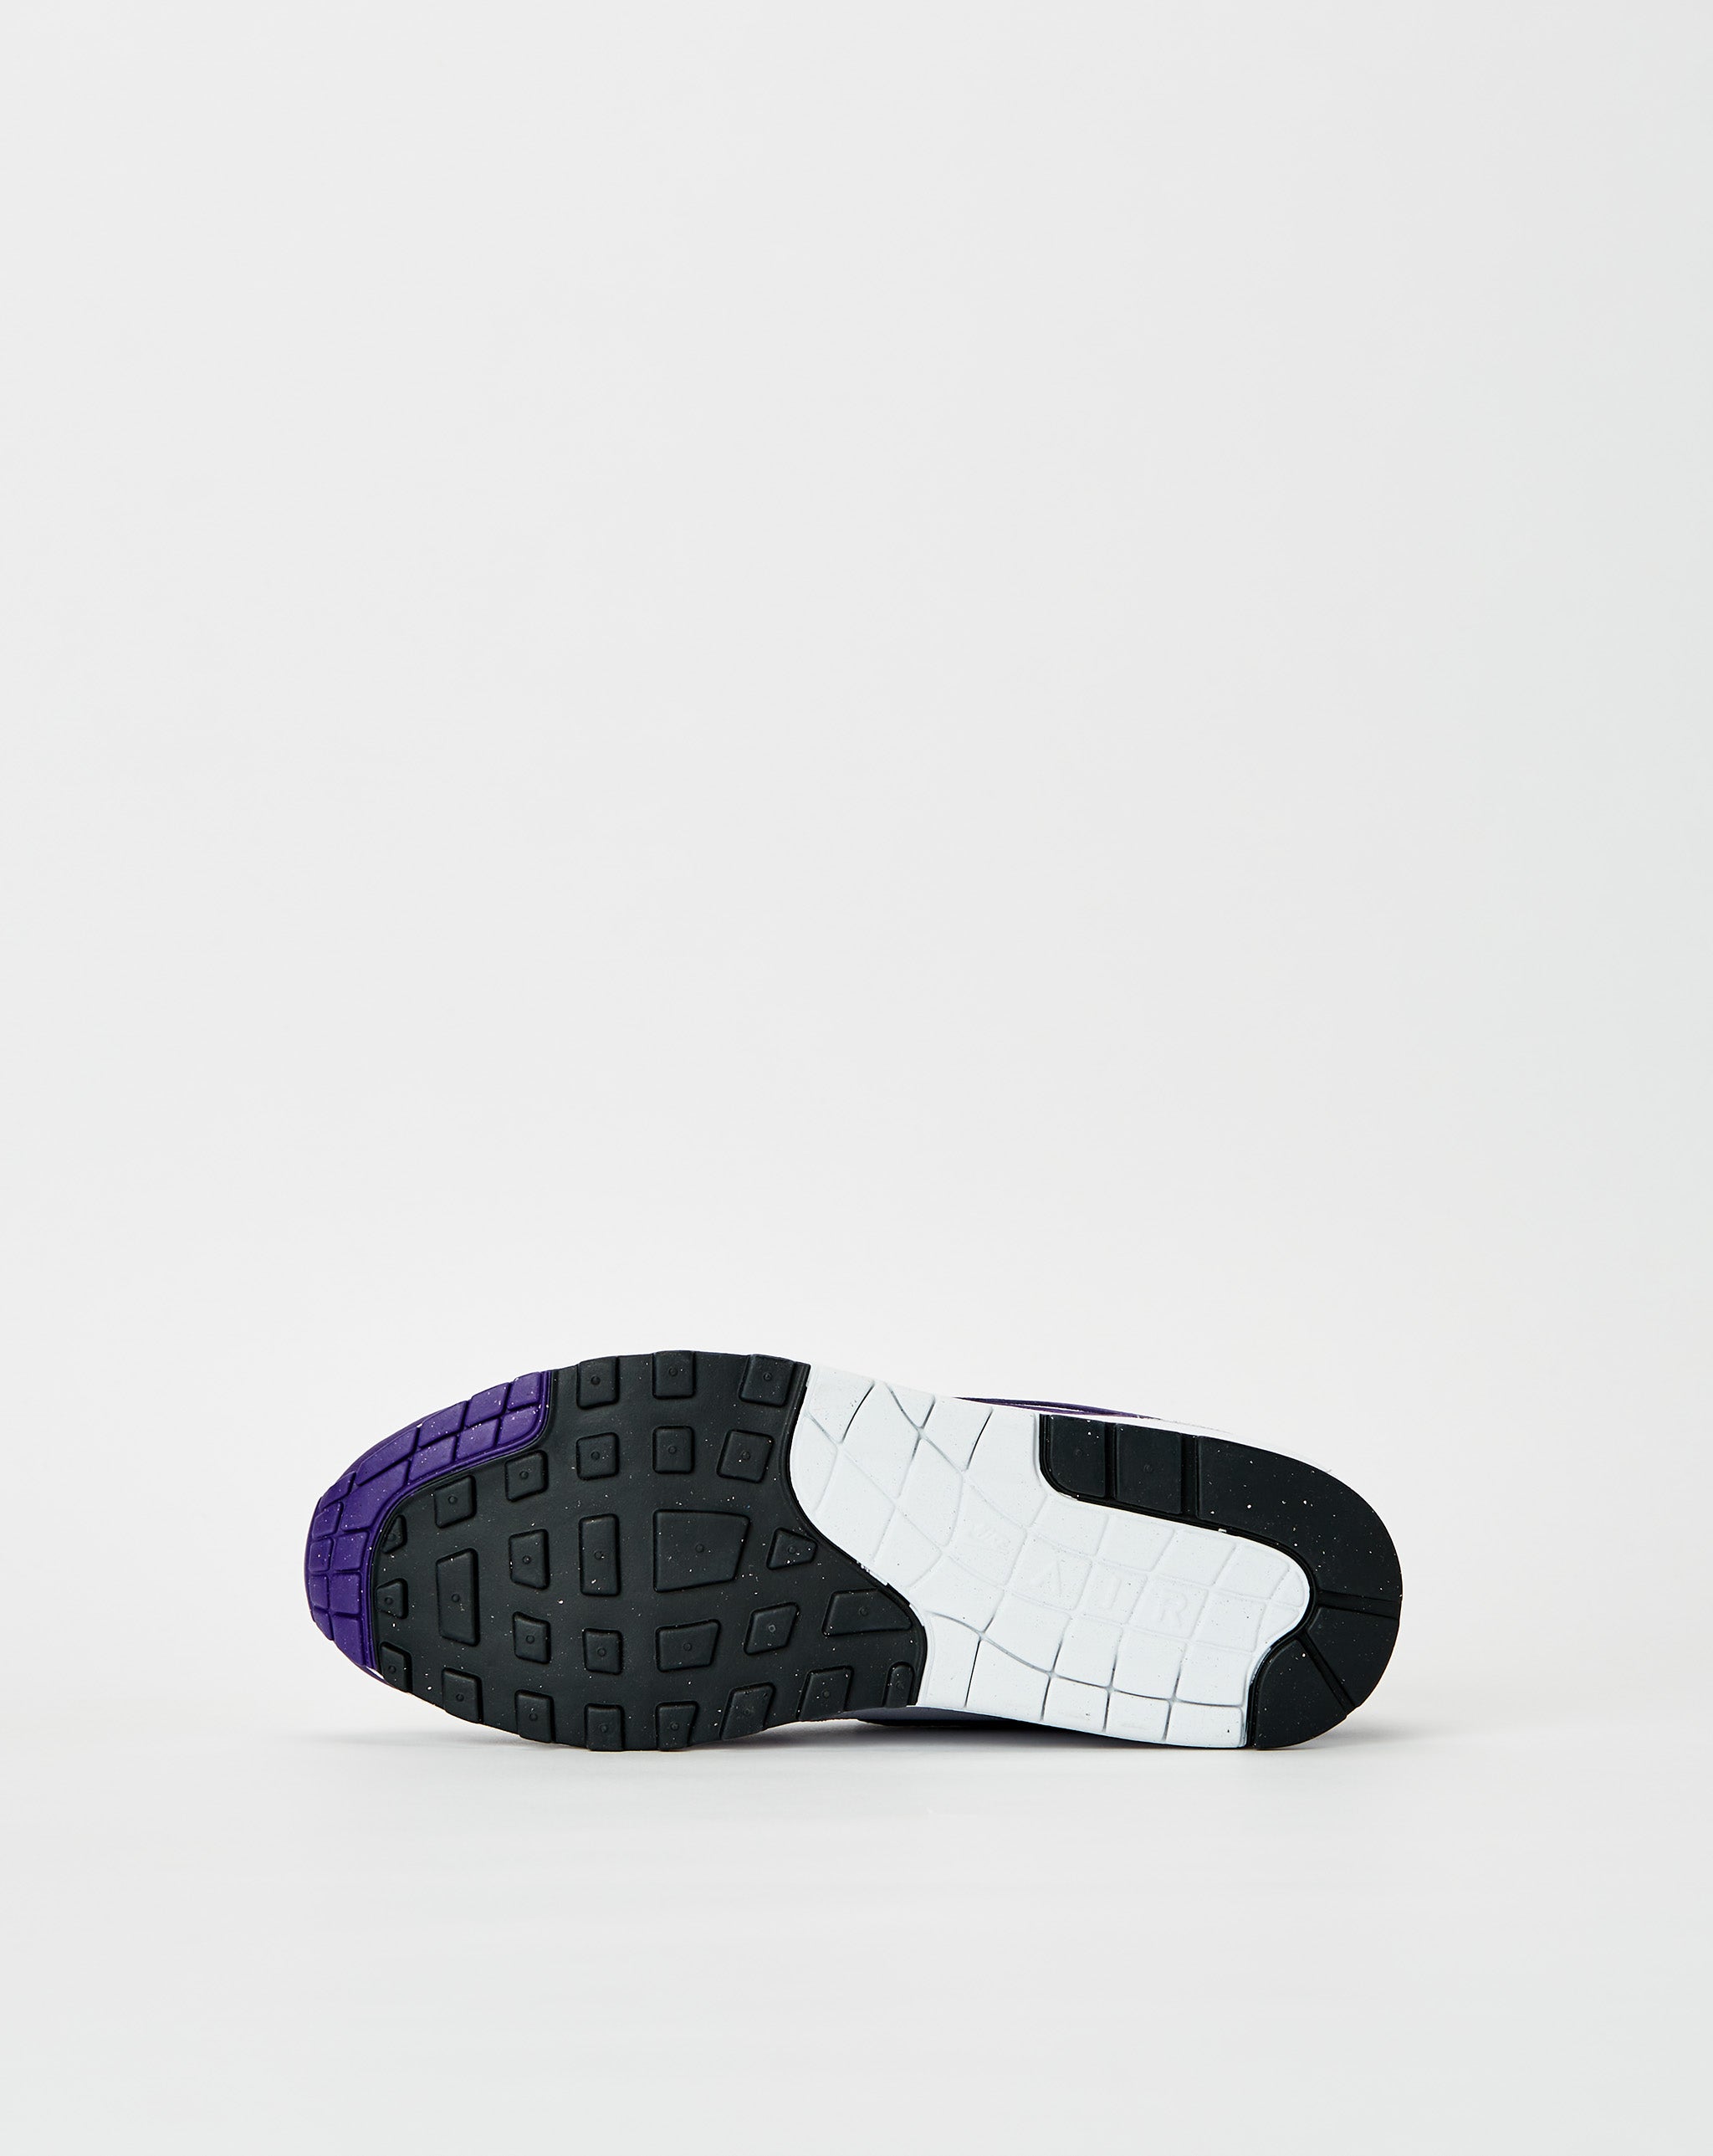 Nike Men S Brand New Nike Metcon Flyknit 3 Cool Grey Fashio  - Cheap Erlebniswelt-fliegenfischen Jordan outlet